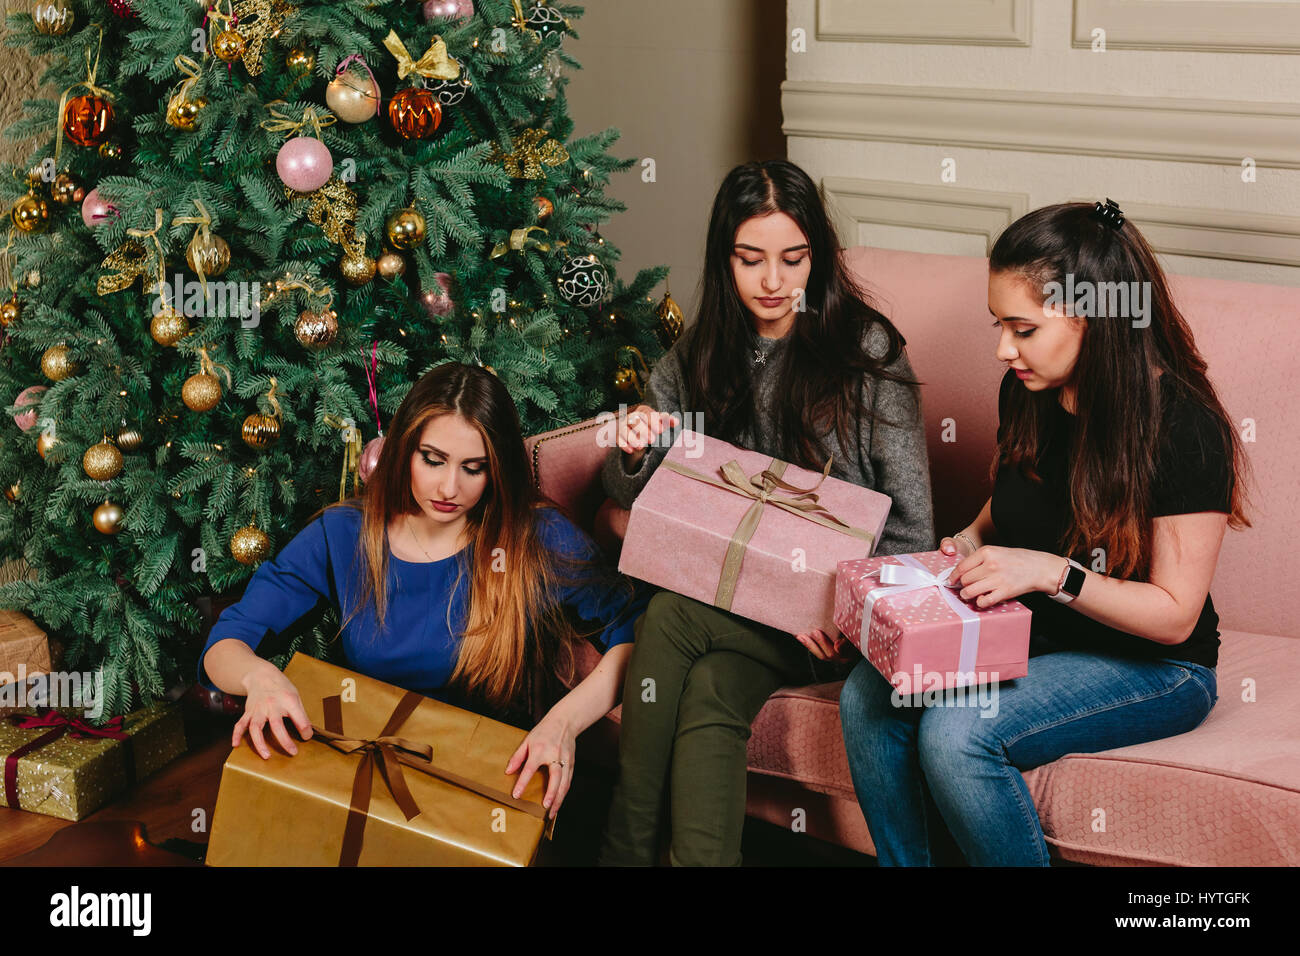 Three beautiful young girls unpack gifts near a Christmas tree. Studio horizontal portrait. Stock Photo